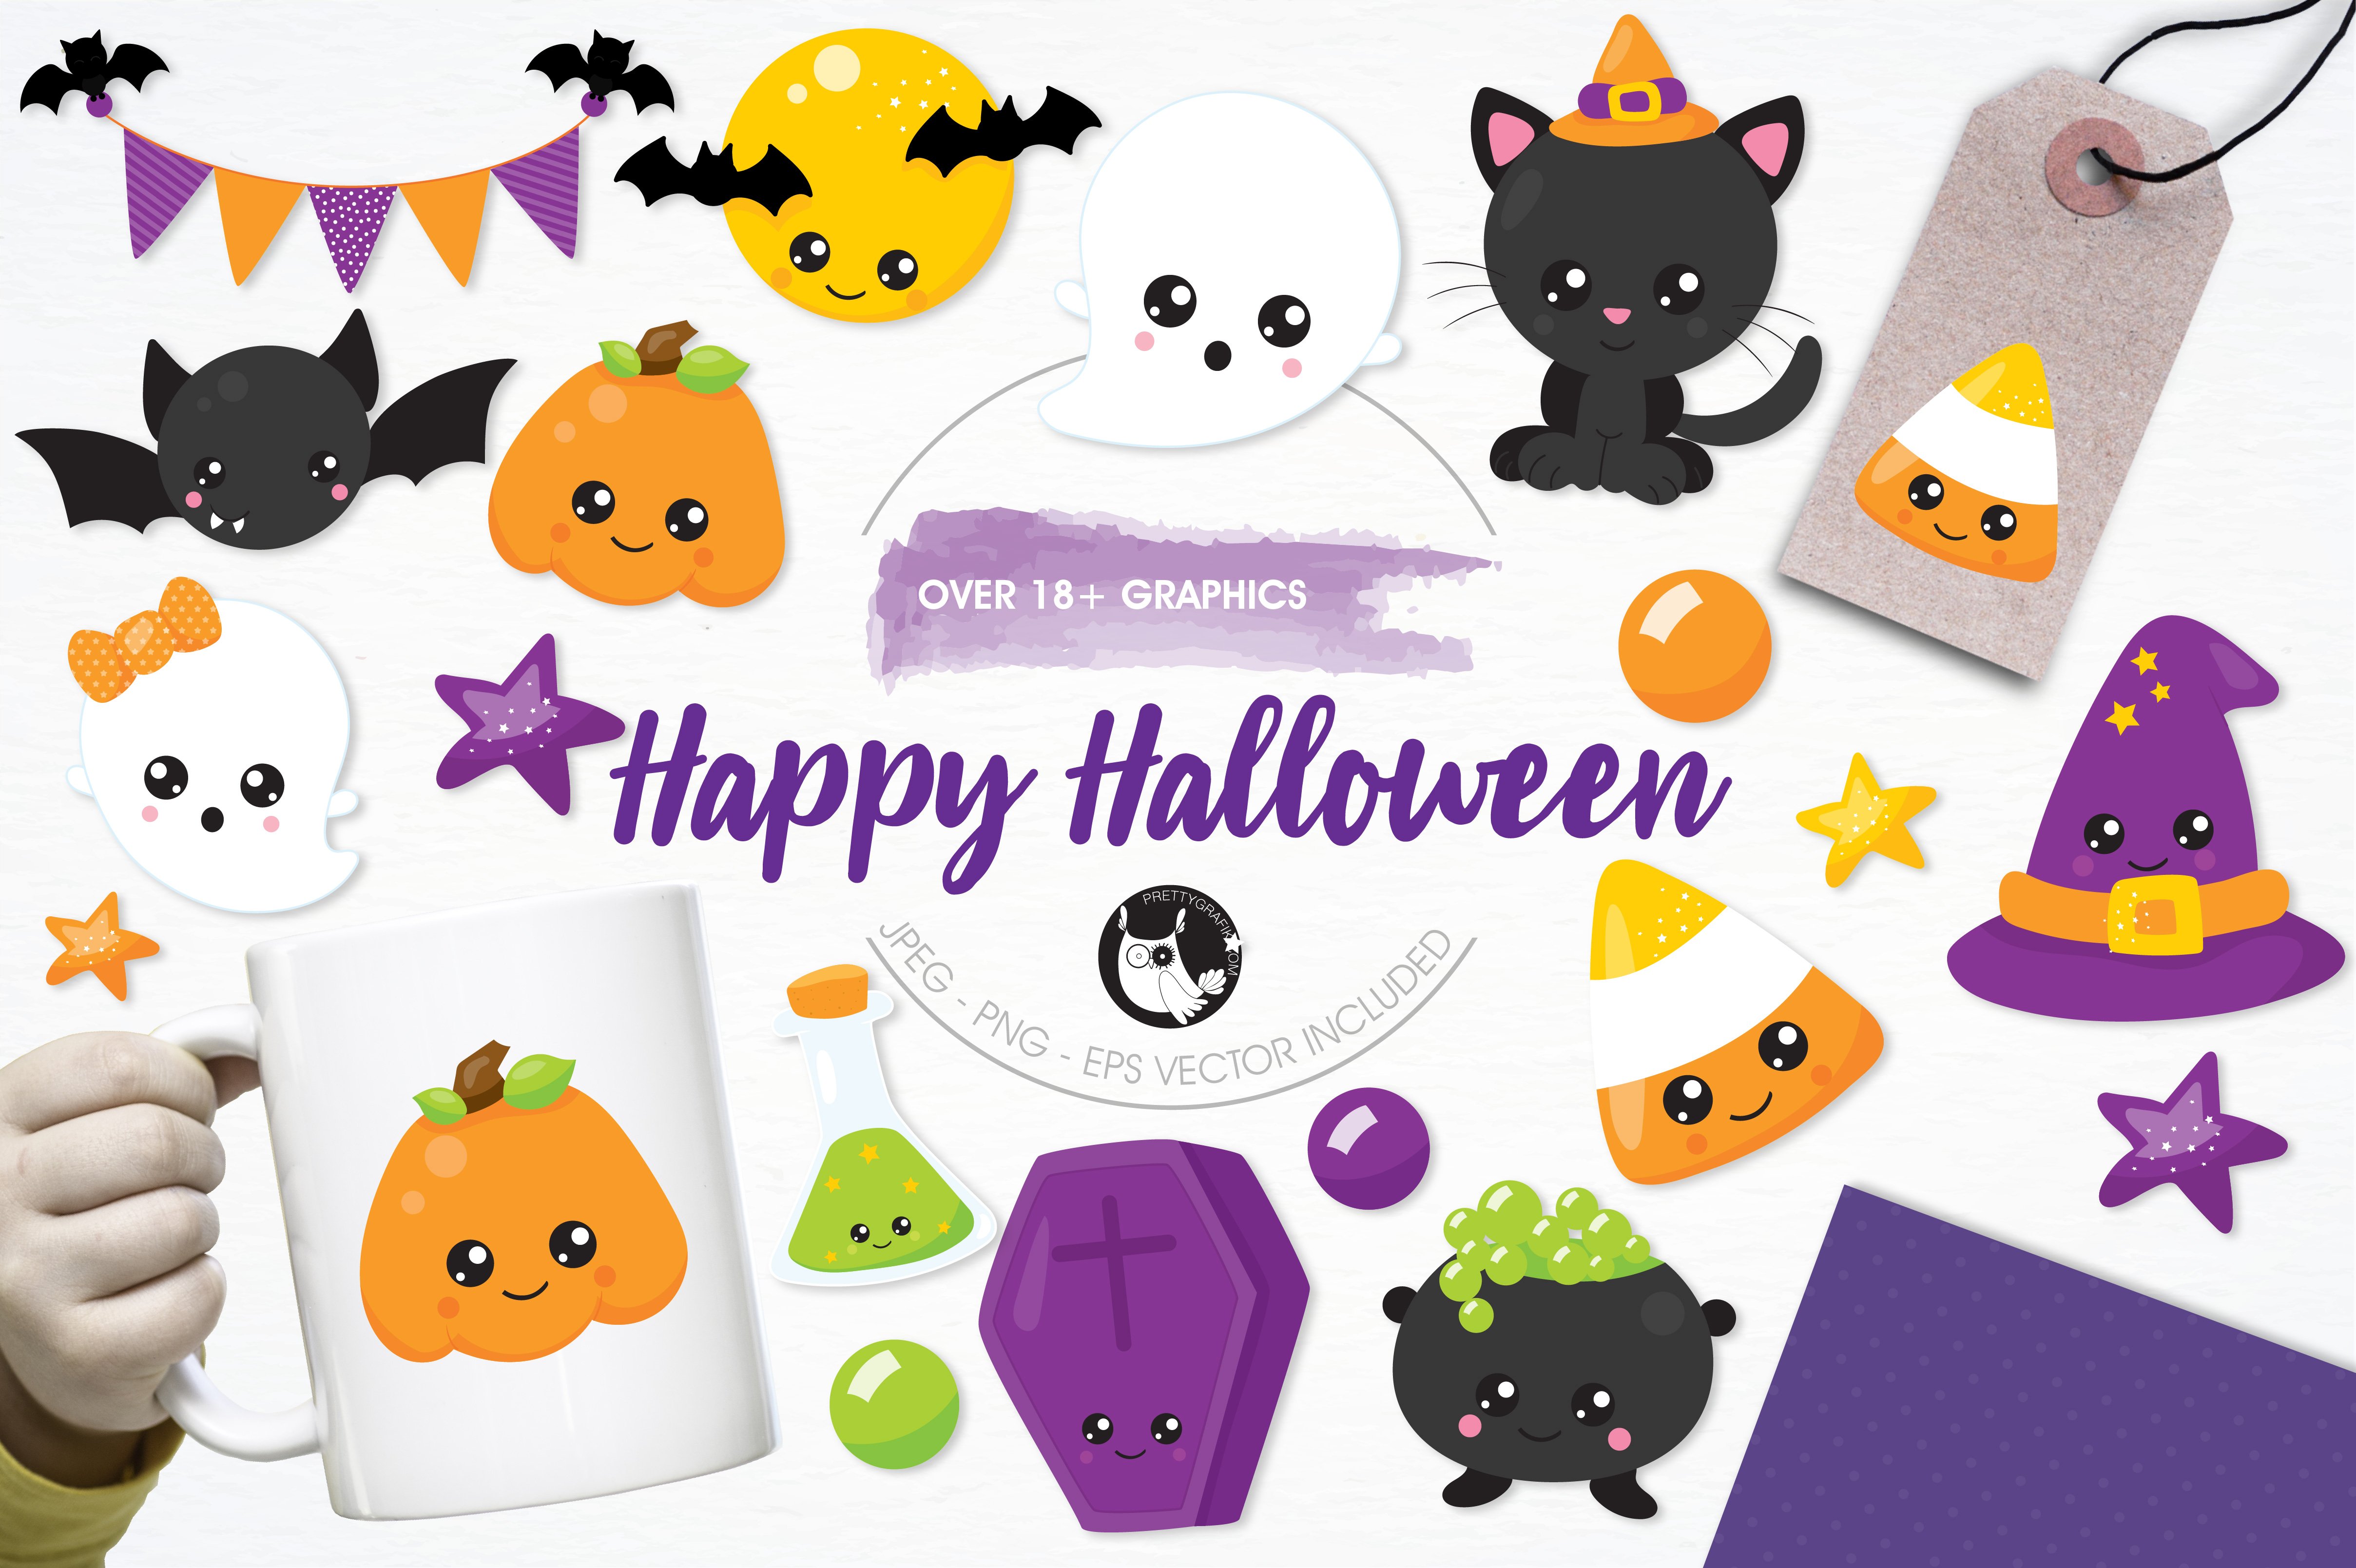 Happy Halloween Illustration Pack - Vector Image